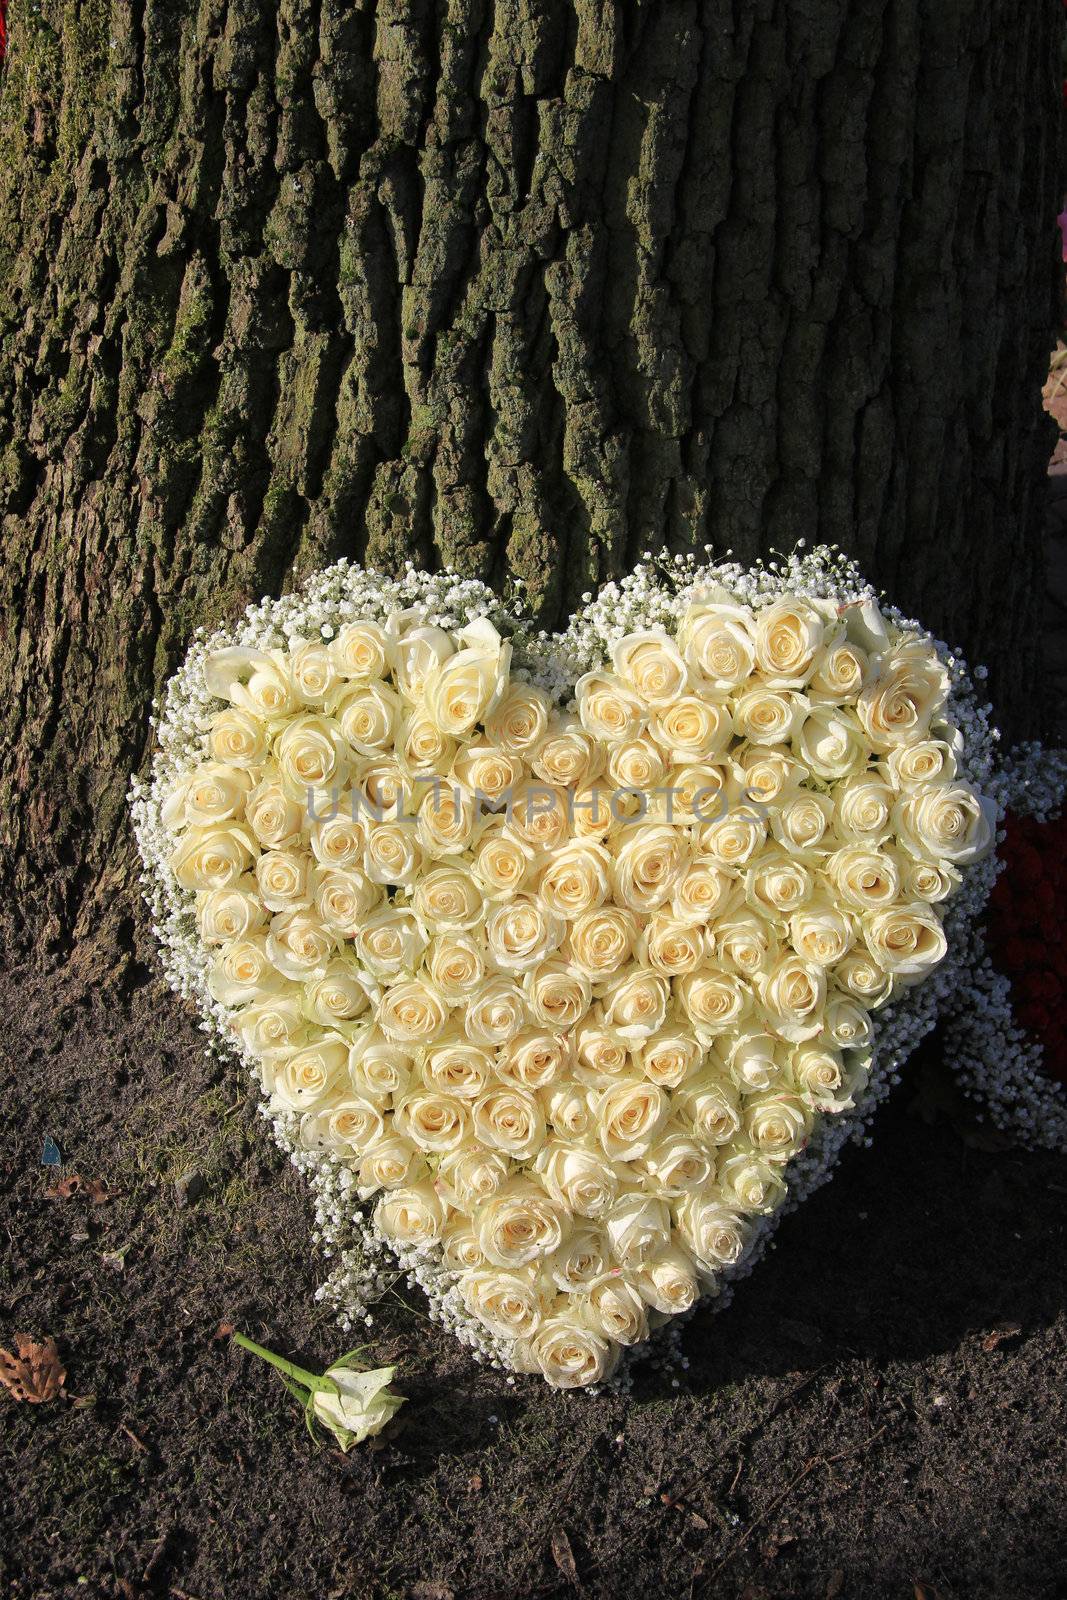 A sympathy flower arrangement in a heart shape, white roses